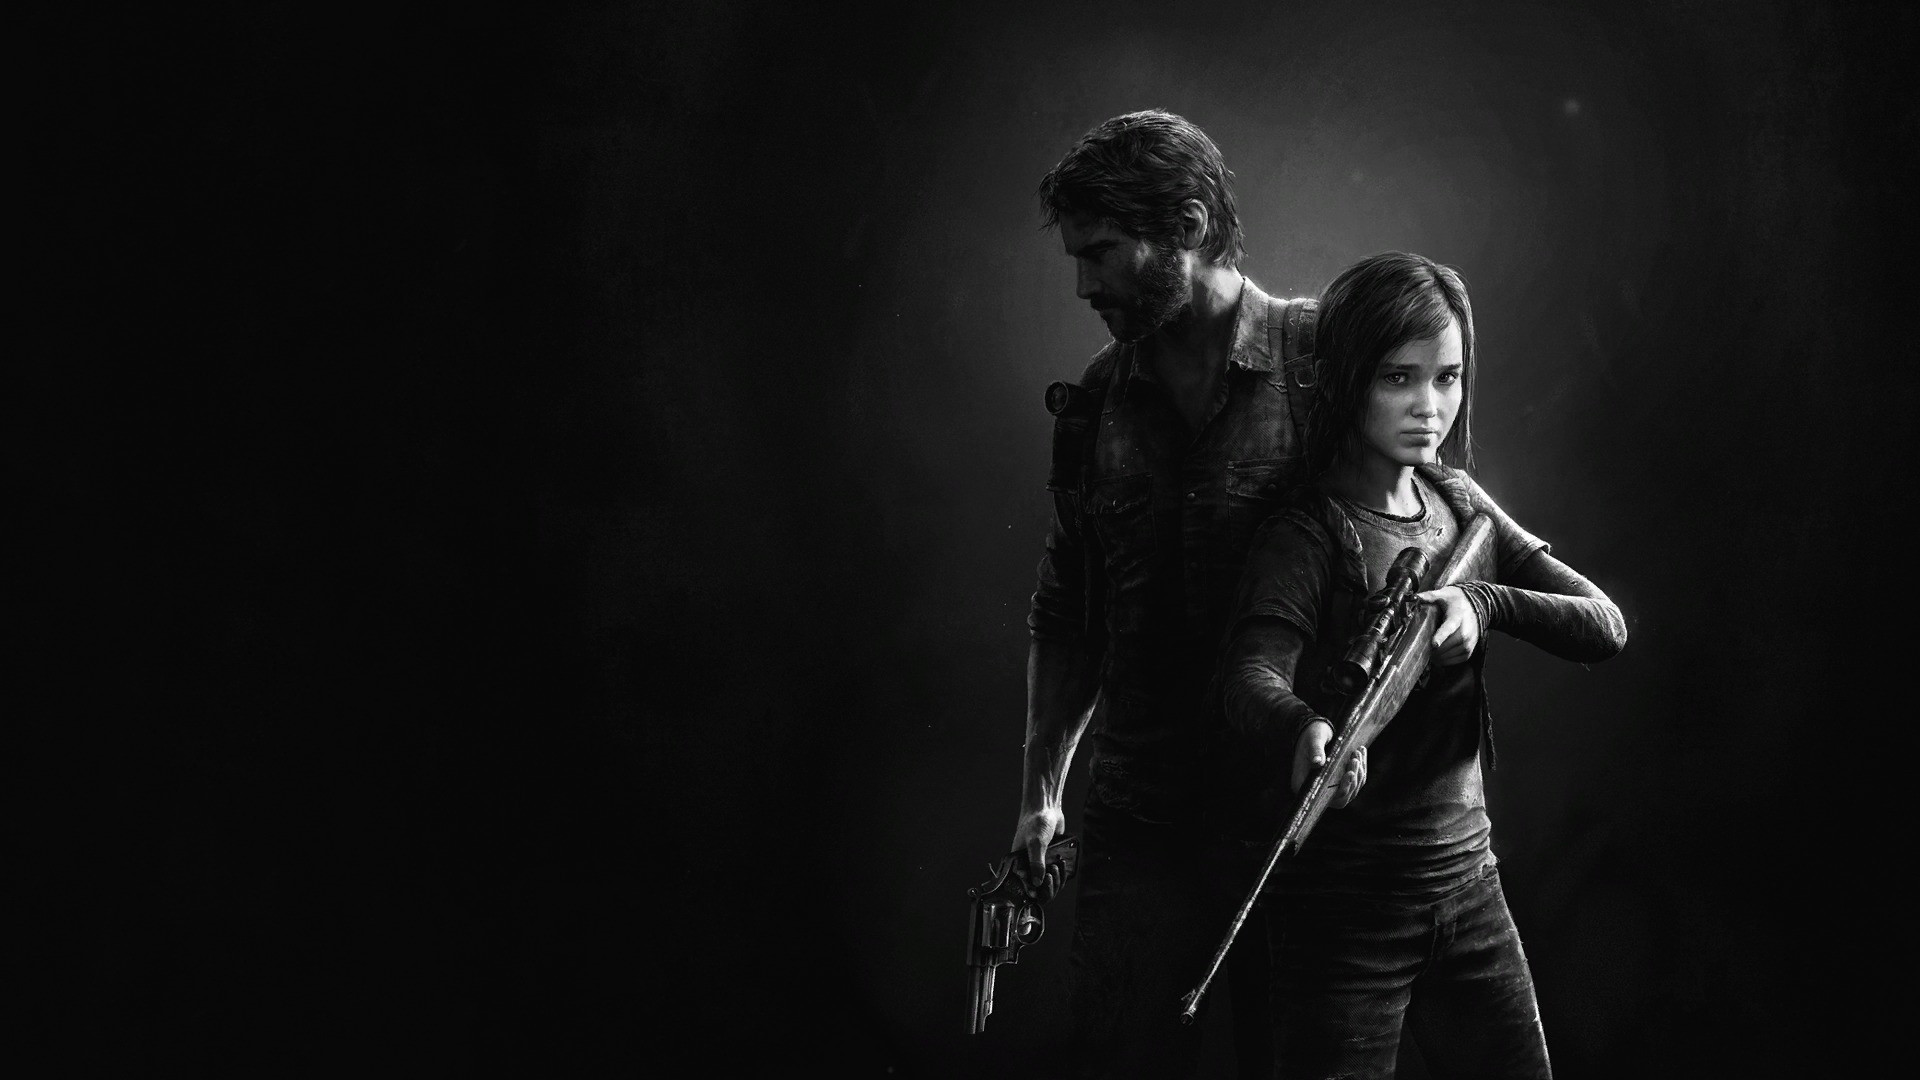 🎮 The Last of Us та Wii Sports потрапили до Зали слави відеоігор